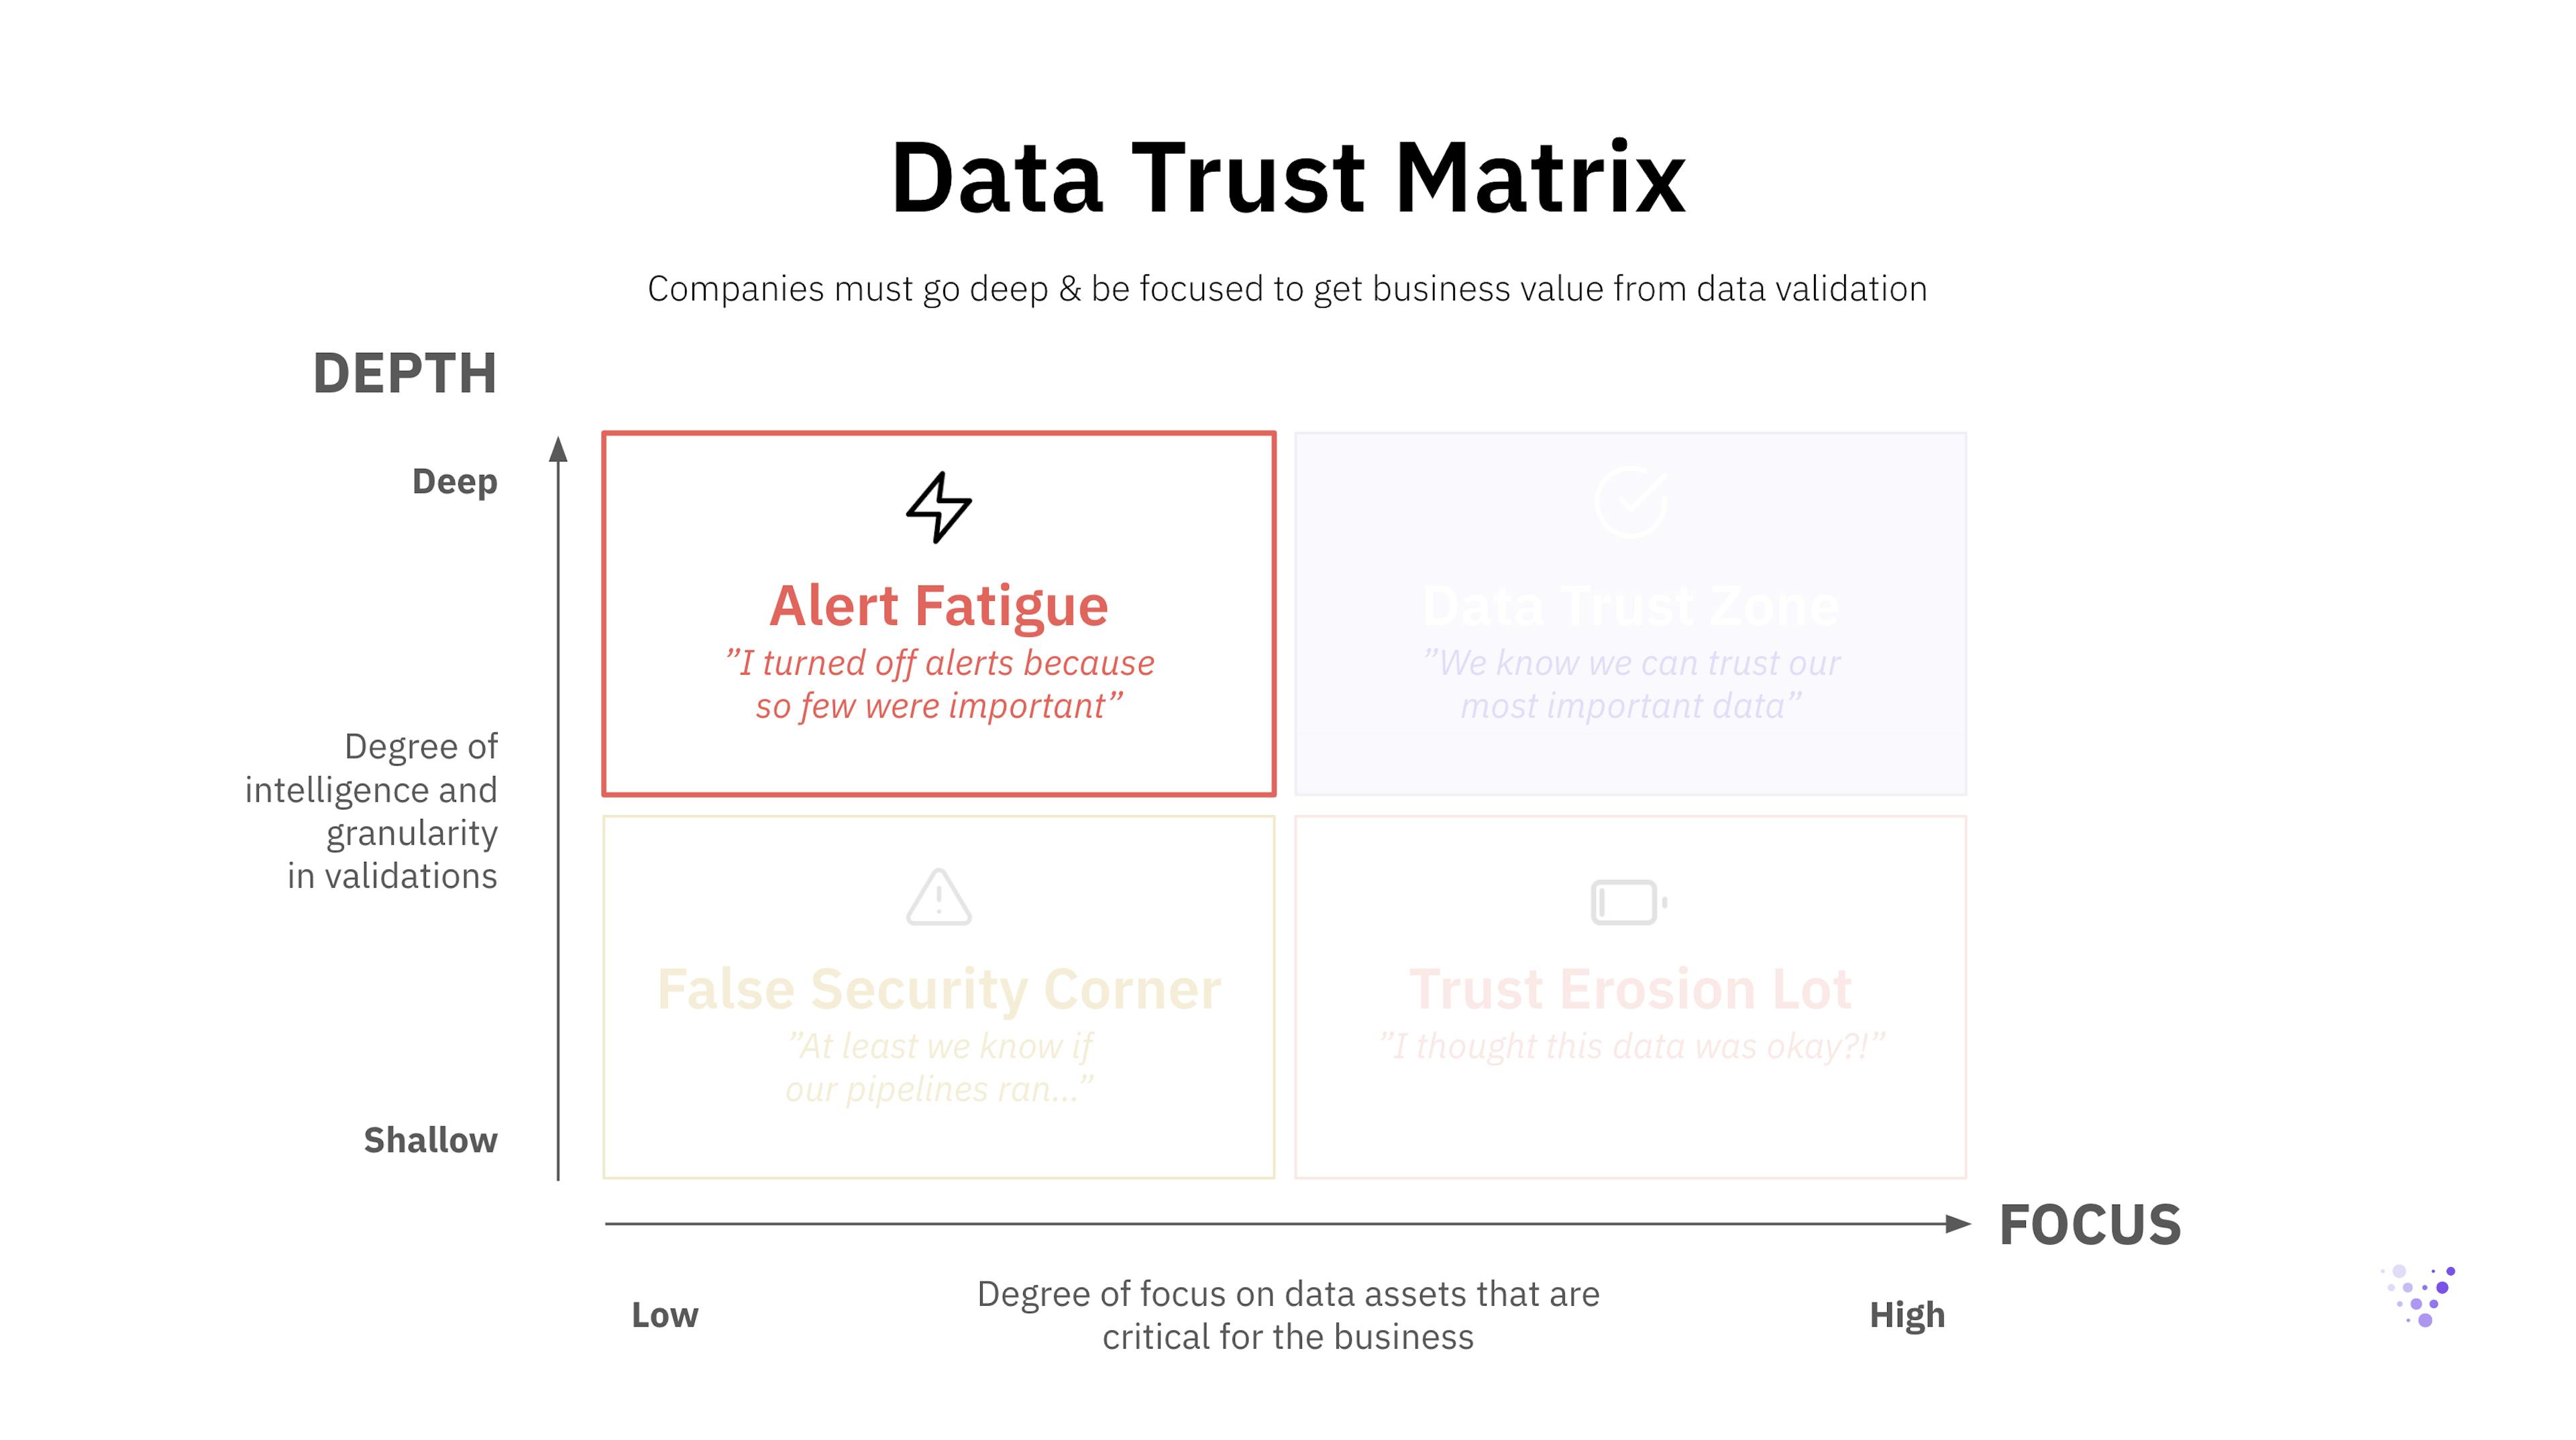 Data Trust Matrix in depth: Alert Fatigue